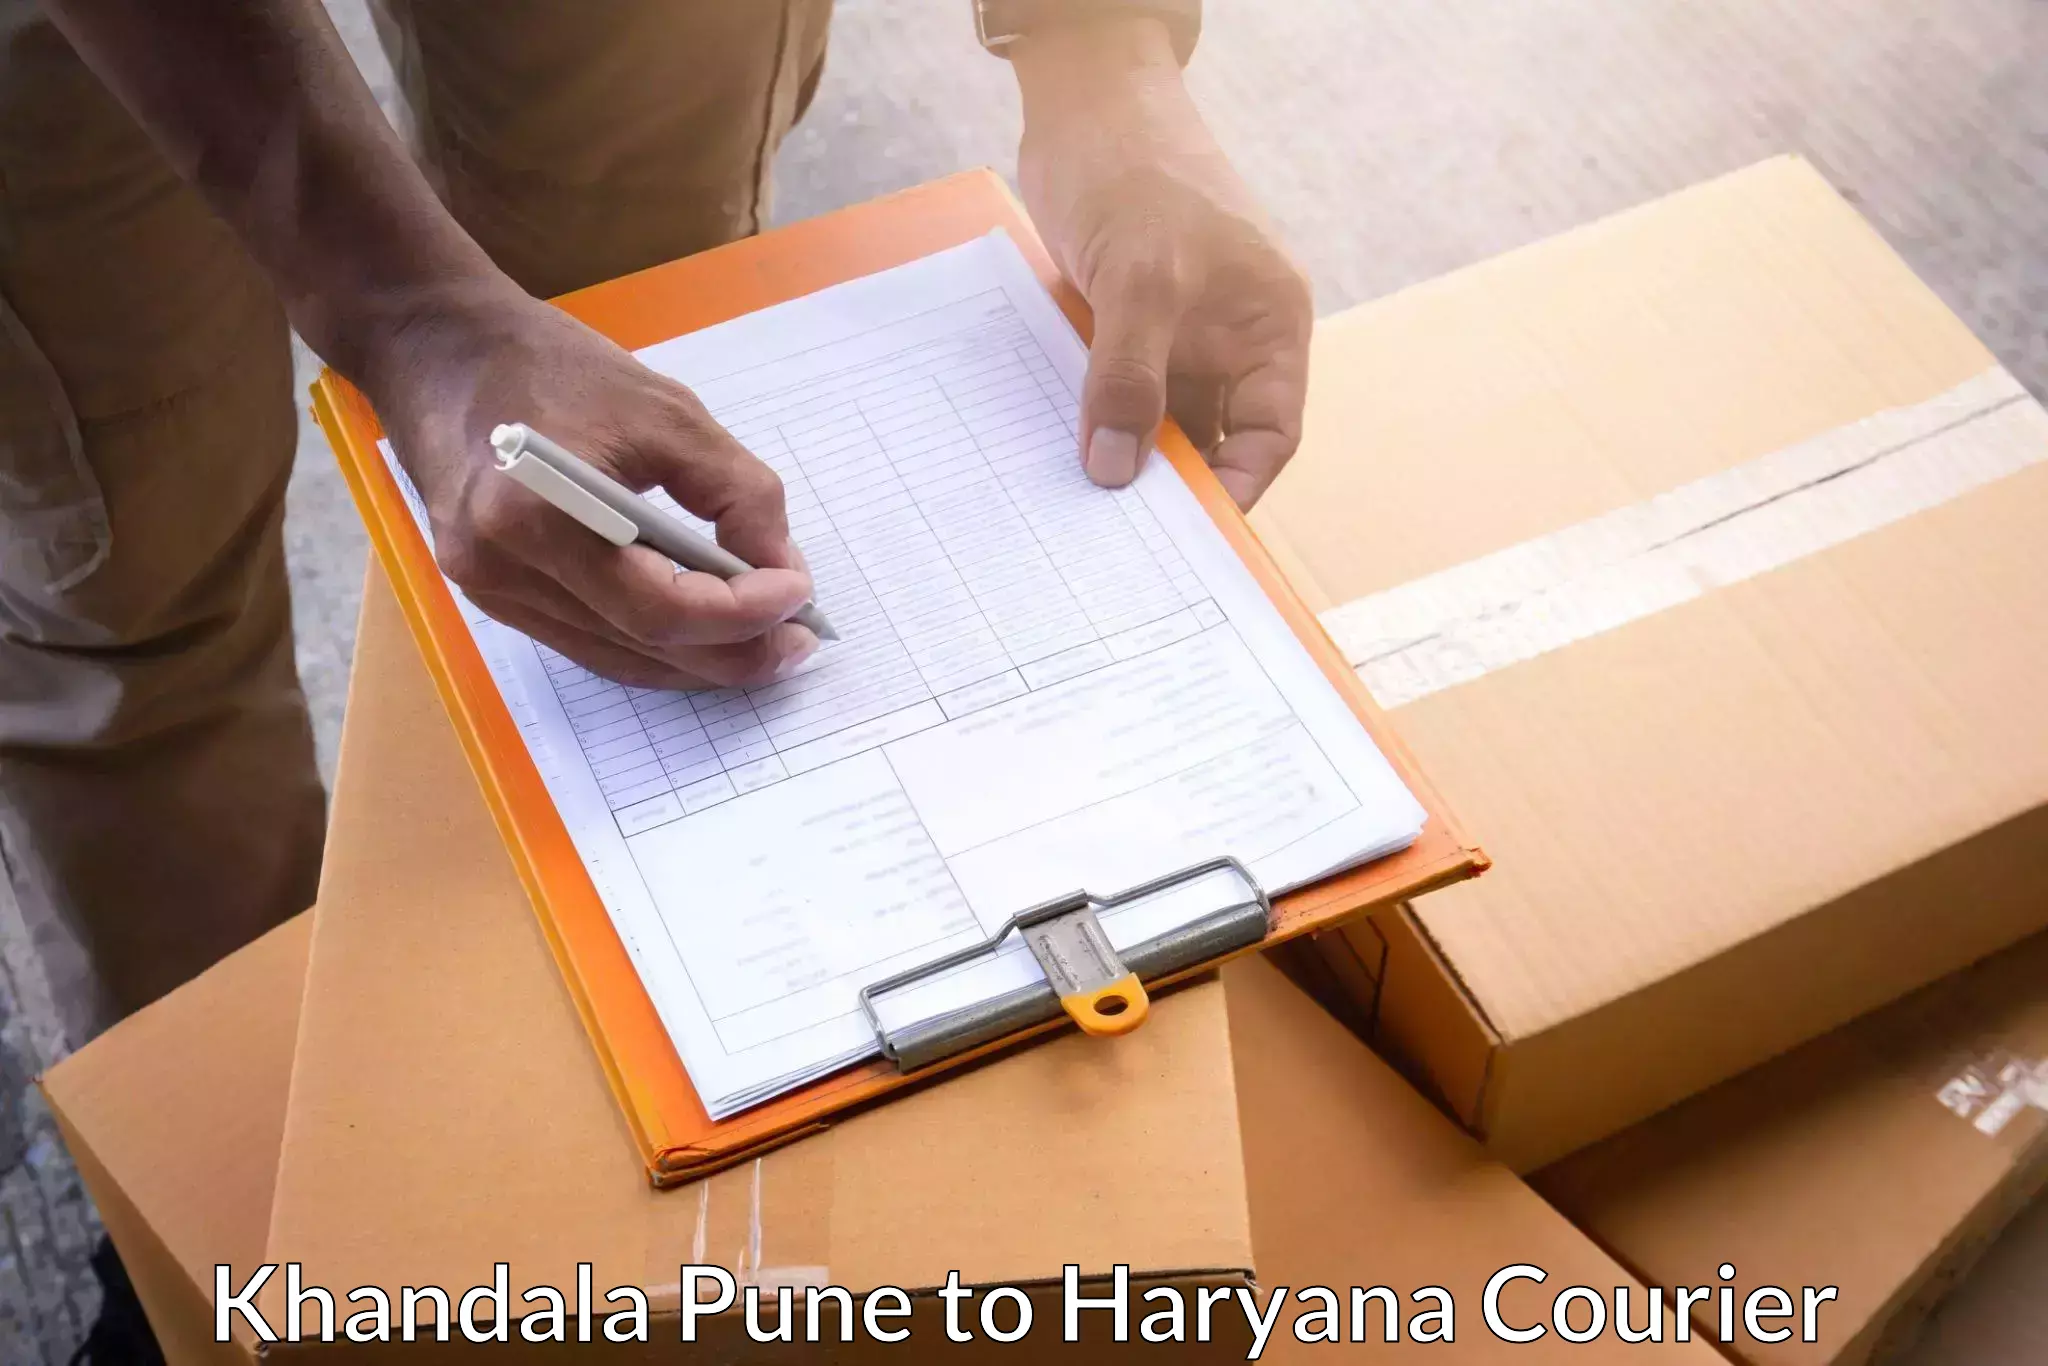 Customer-focused courier Khandala Pune to Haryana